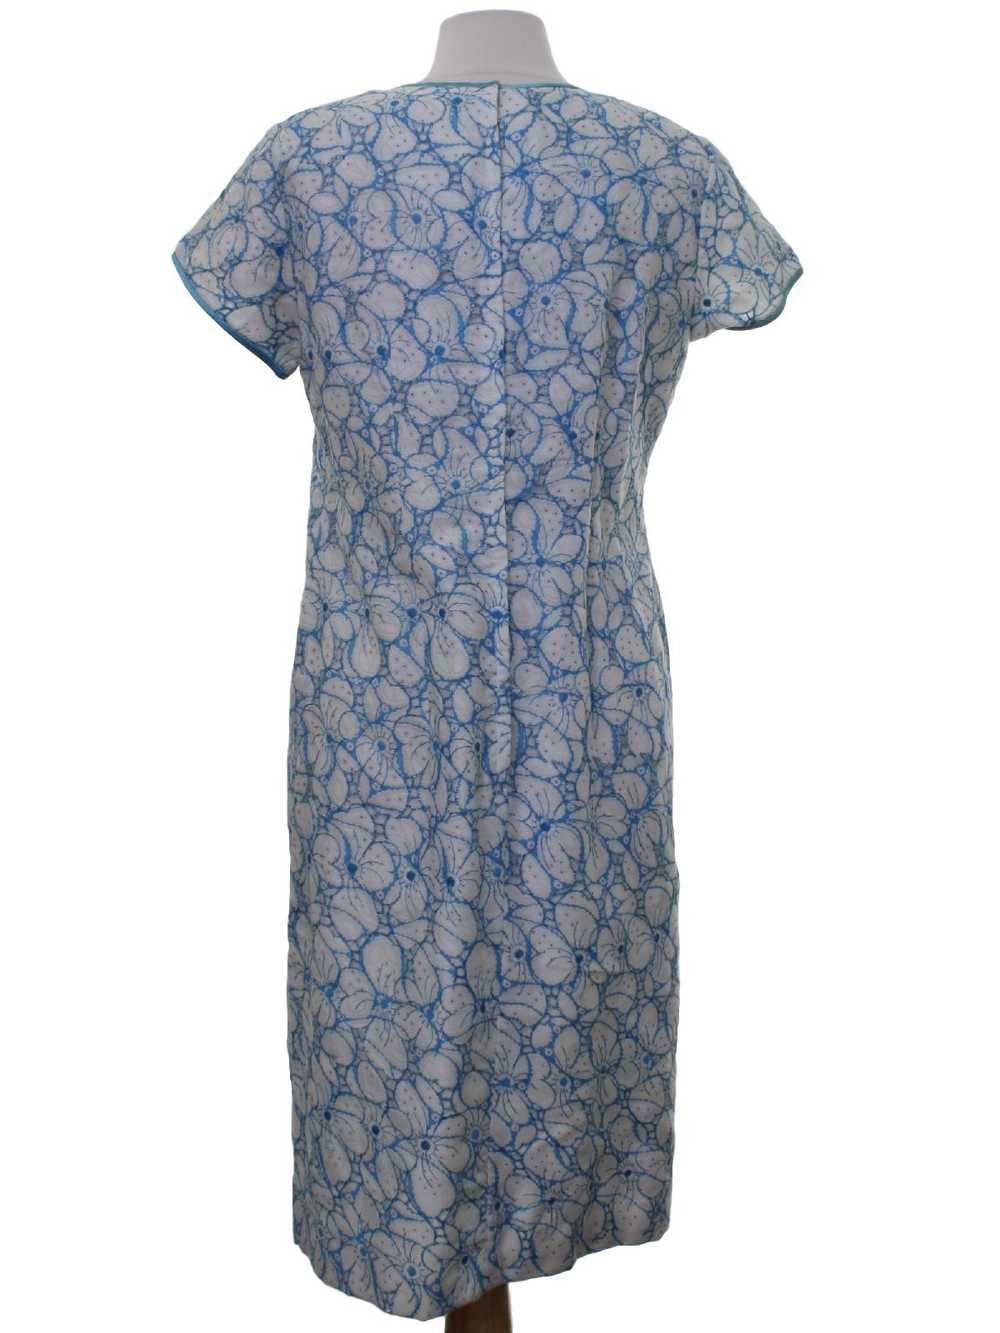 1960's Renmor Mod Dress - image 3